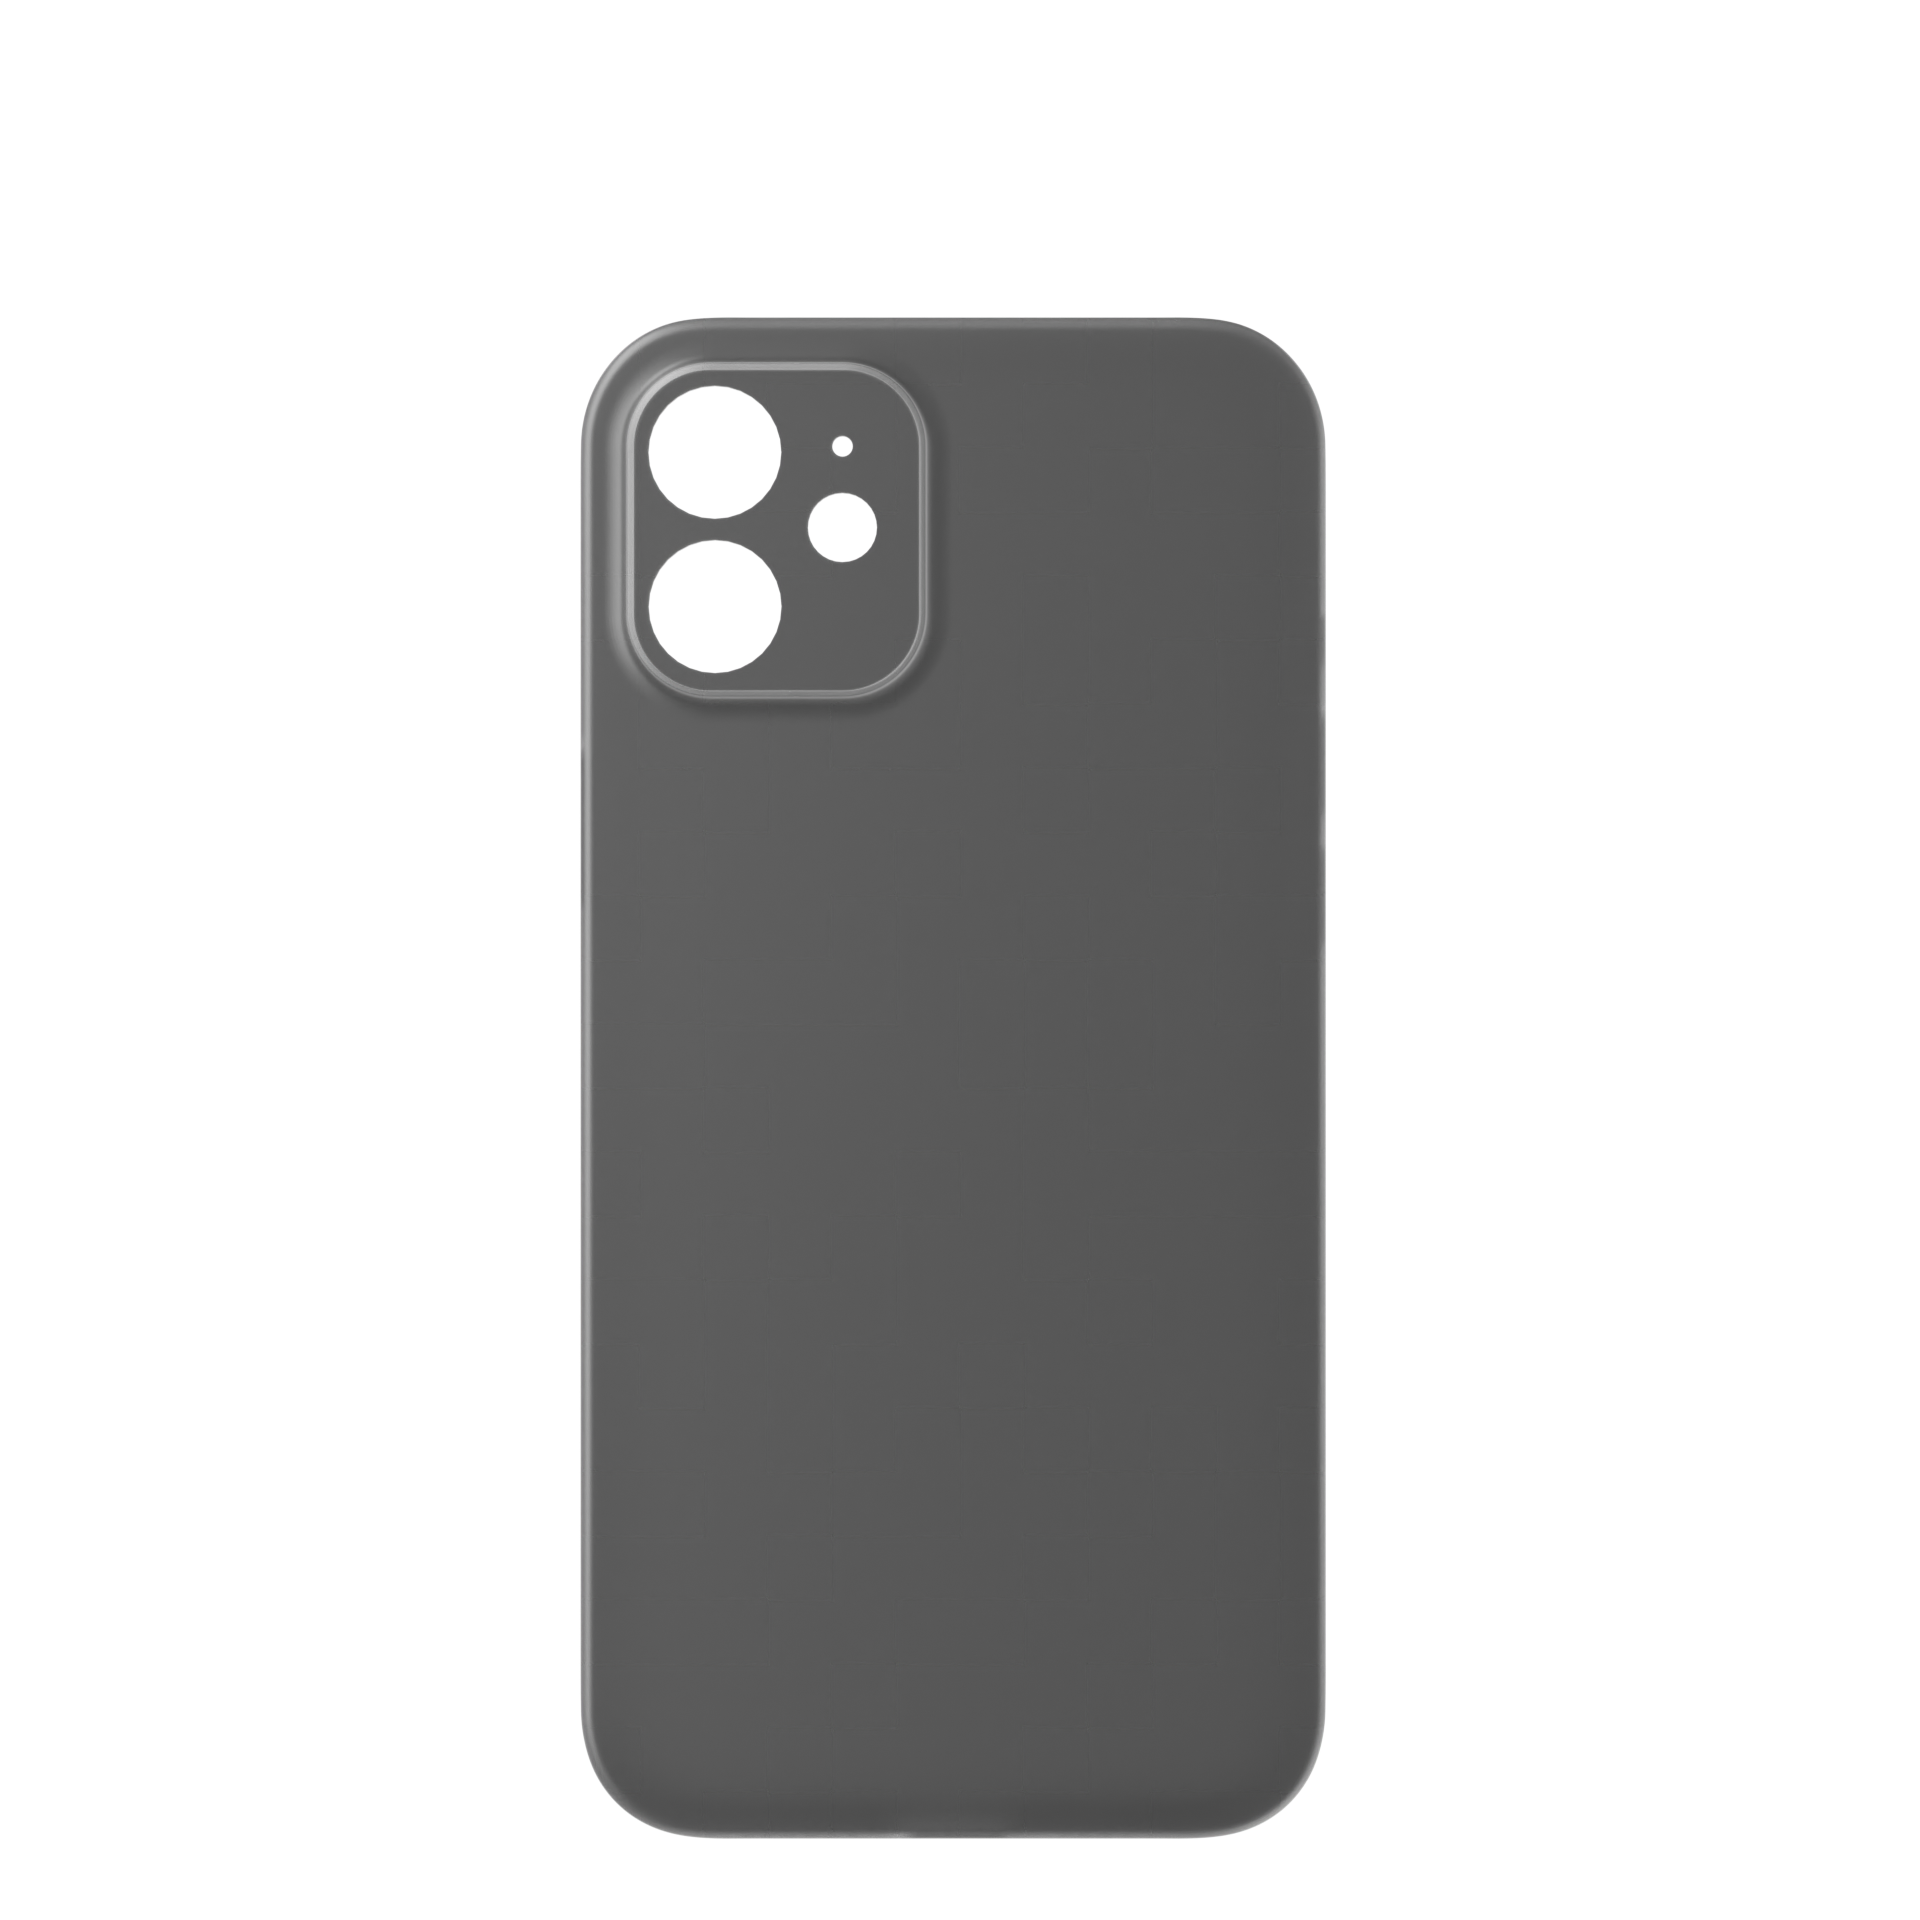 Thin black iPhone 11 case